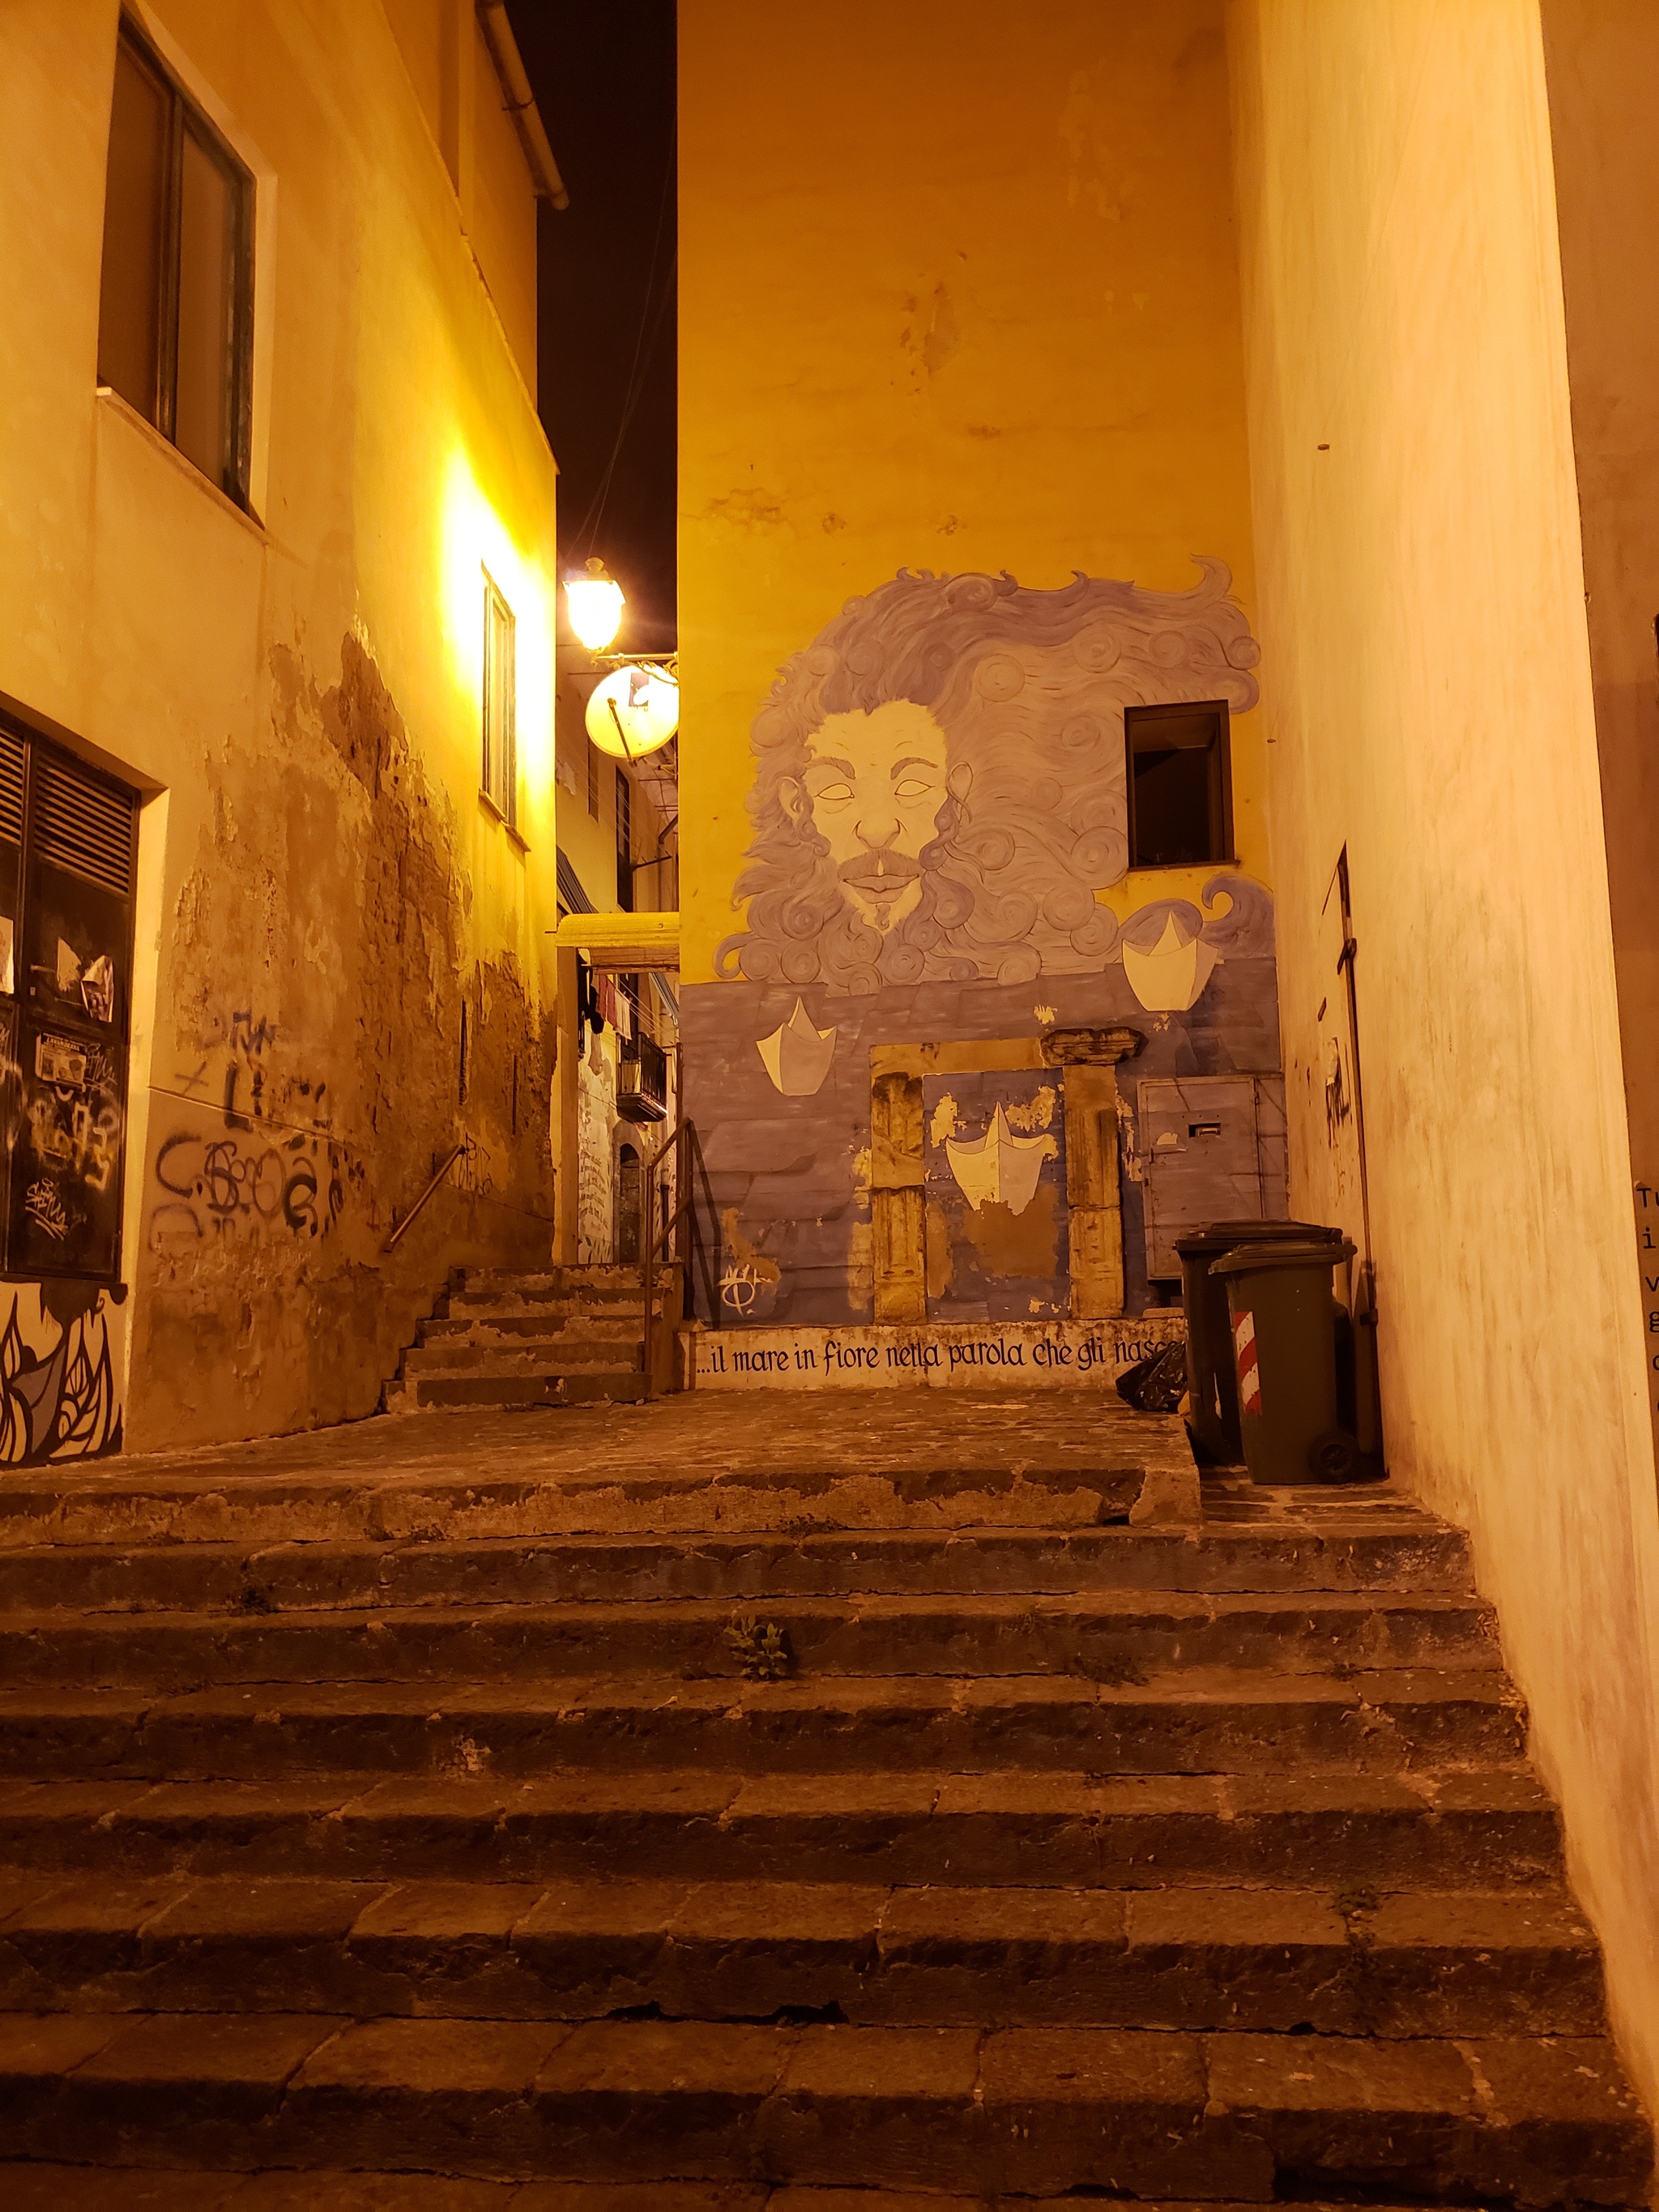 Graffiti, Salerno - My, Italy, Graffiti, Travels, Sailors, Mobile photography, Longpost